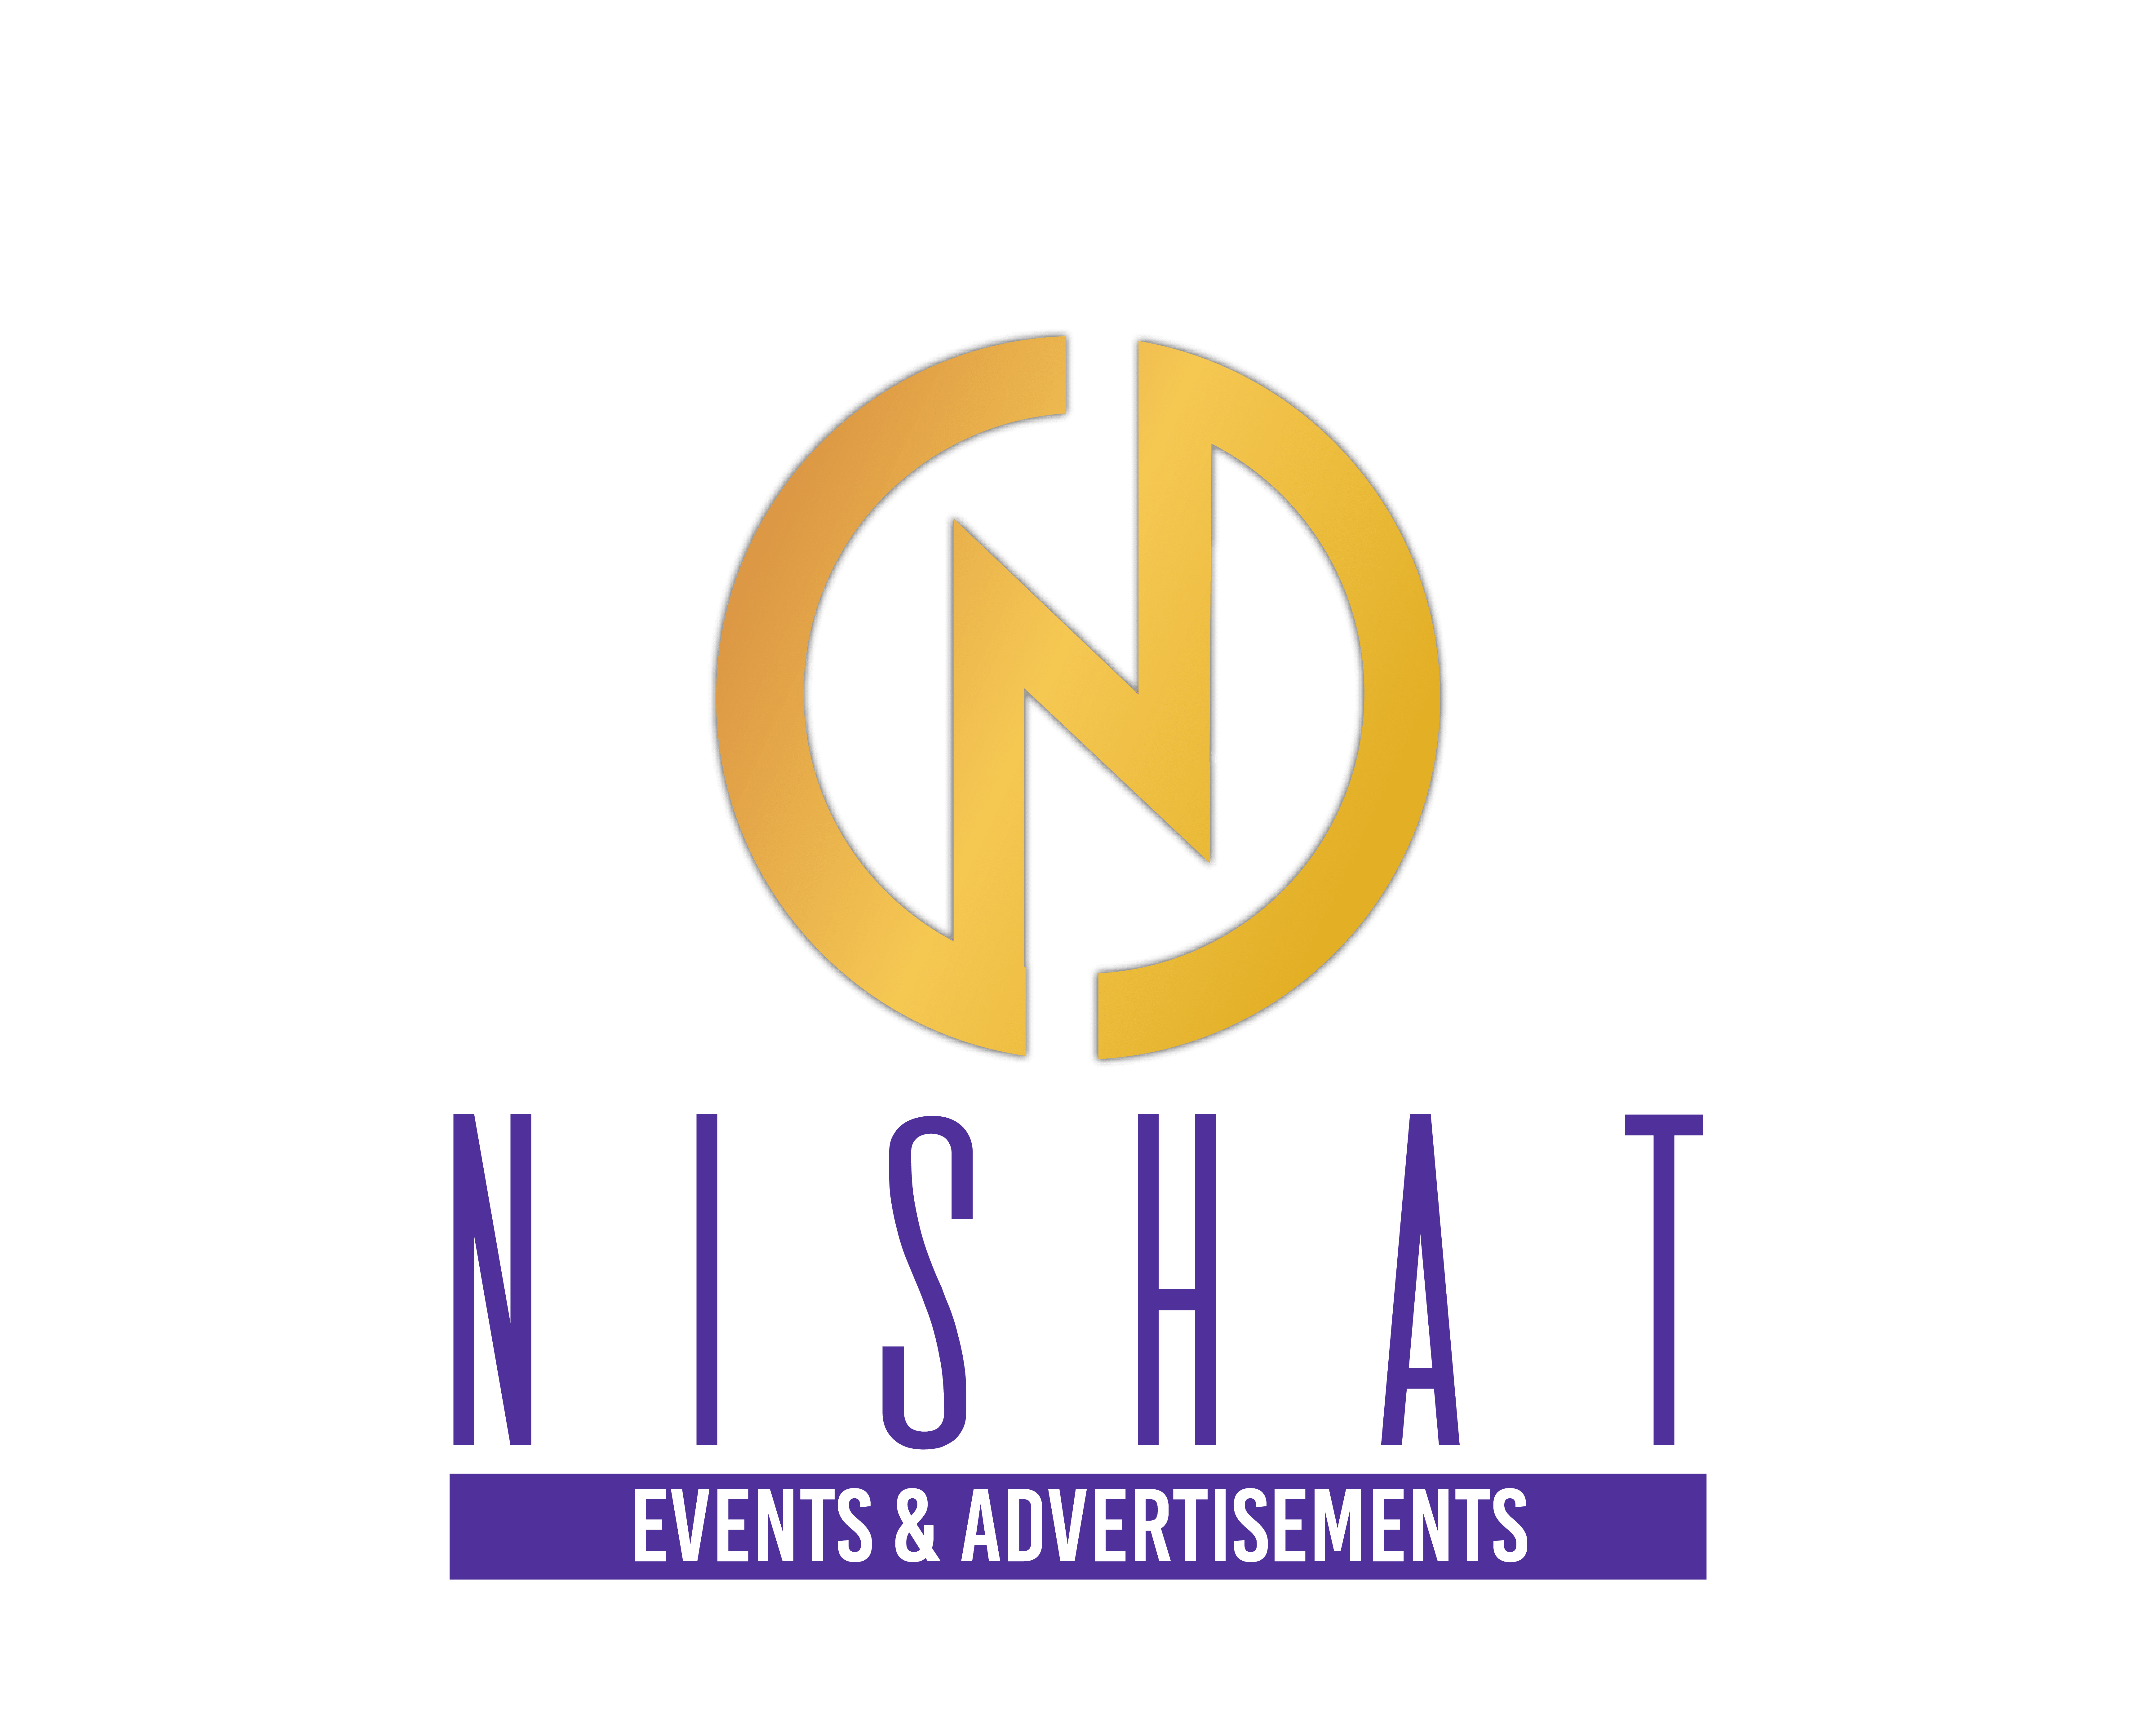 Nishat Events & Advertisements